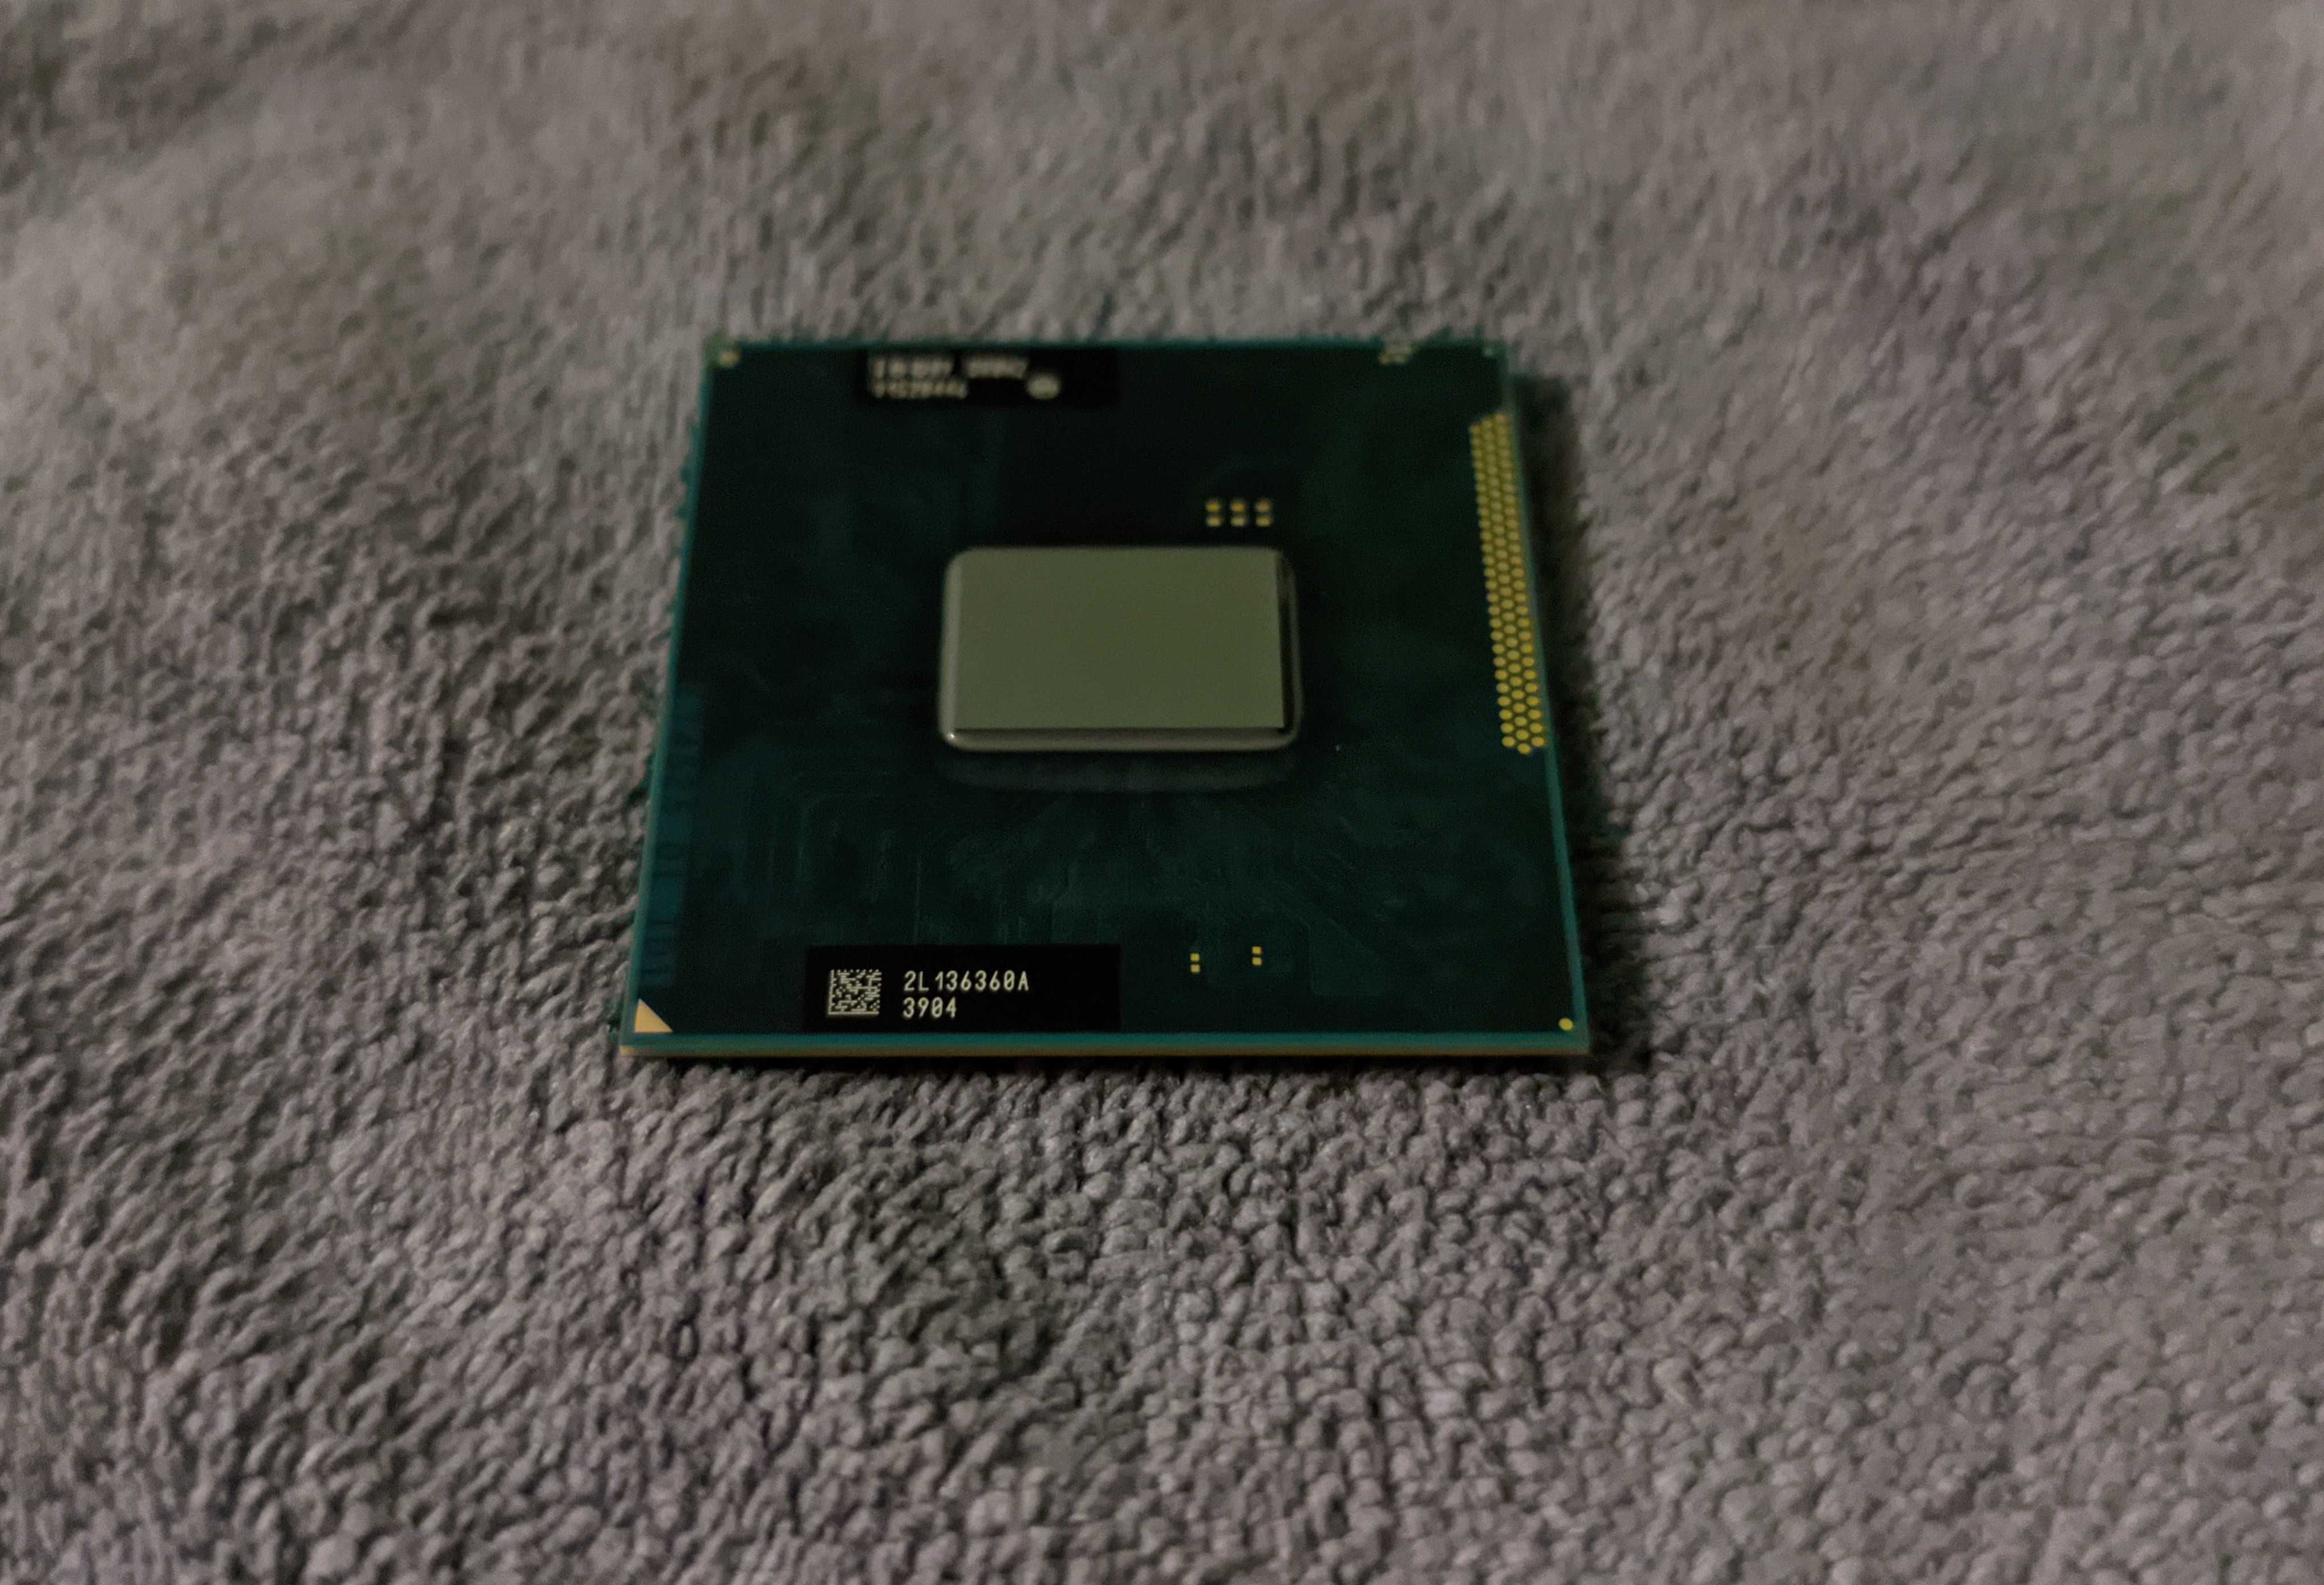 Procesor do laptopa Intel Celeron B815 1.60 GHz 2MB 1066 MHz SR0HZ